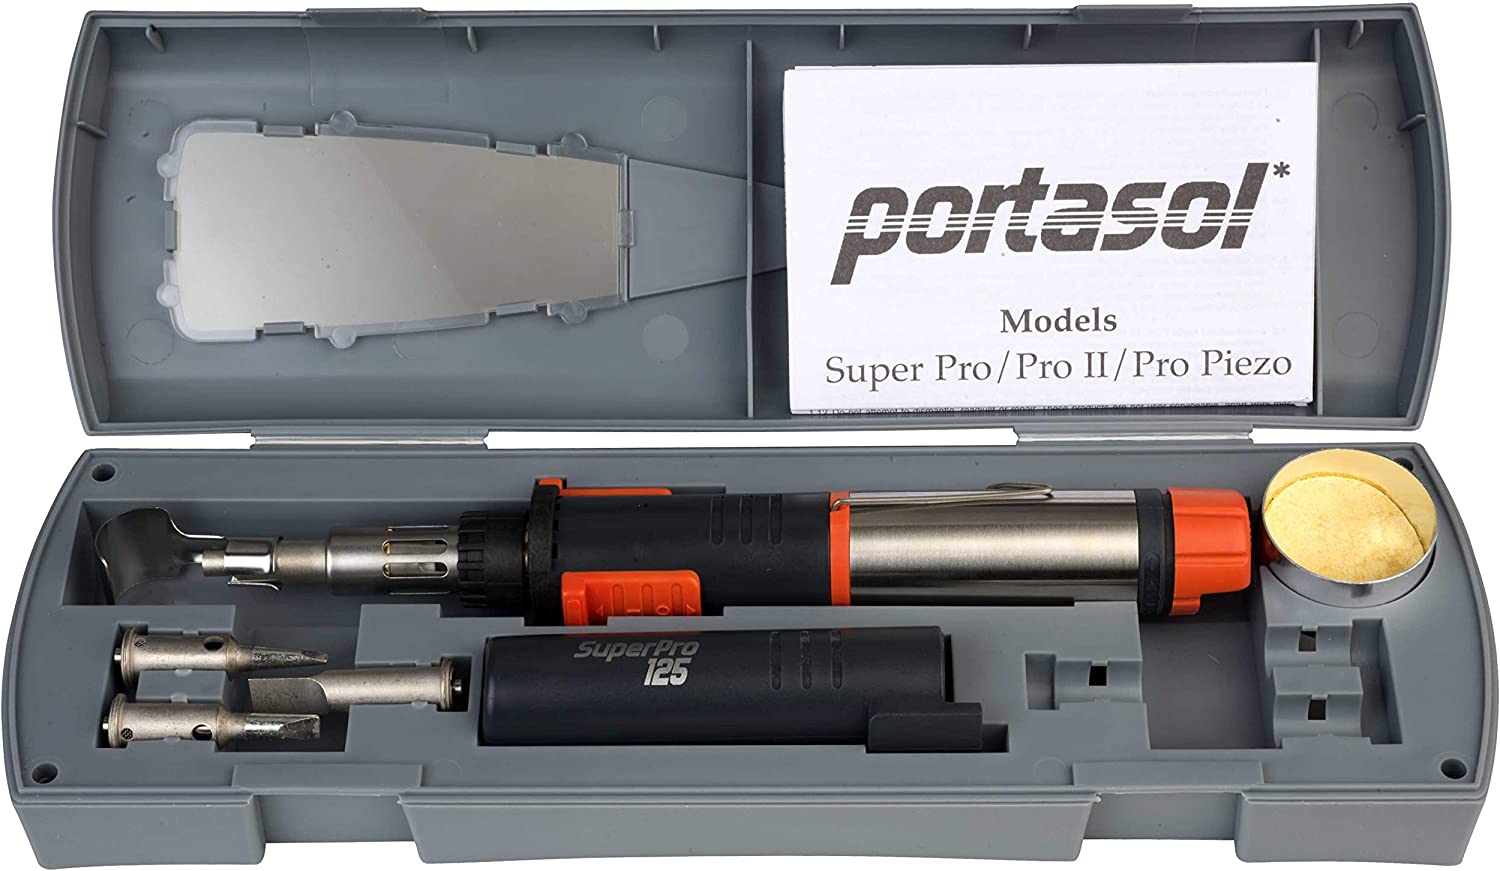 Portasol - SuperPro Butane Soldering Iron (POR-SP-1K) - MPR Tools & Equipment